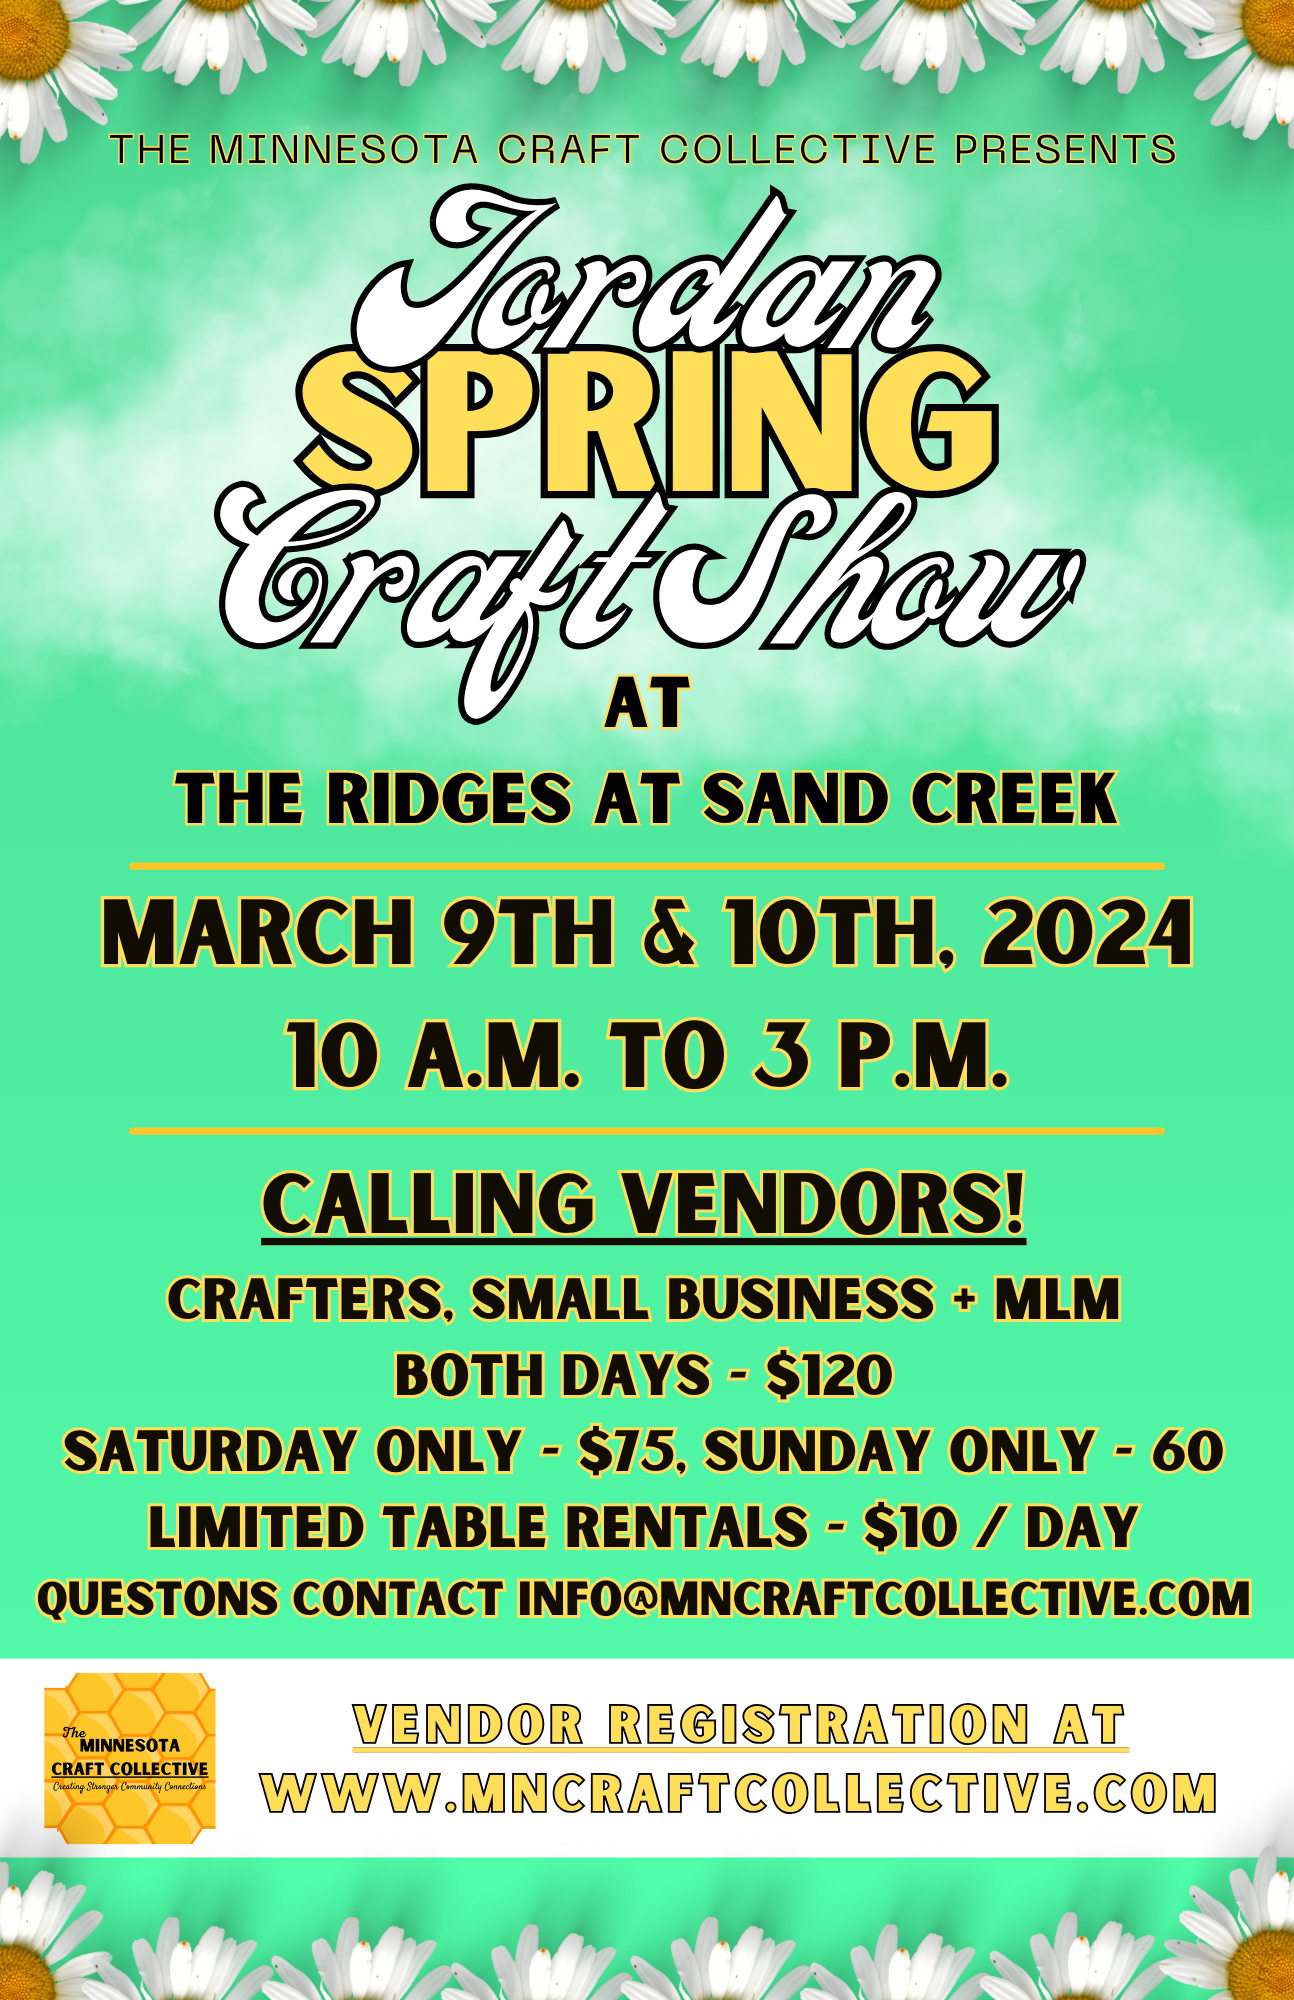 March 9th & 10th, 2024 Jordan Spring Craft Show Minnesota Craft